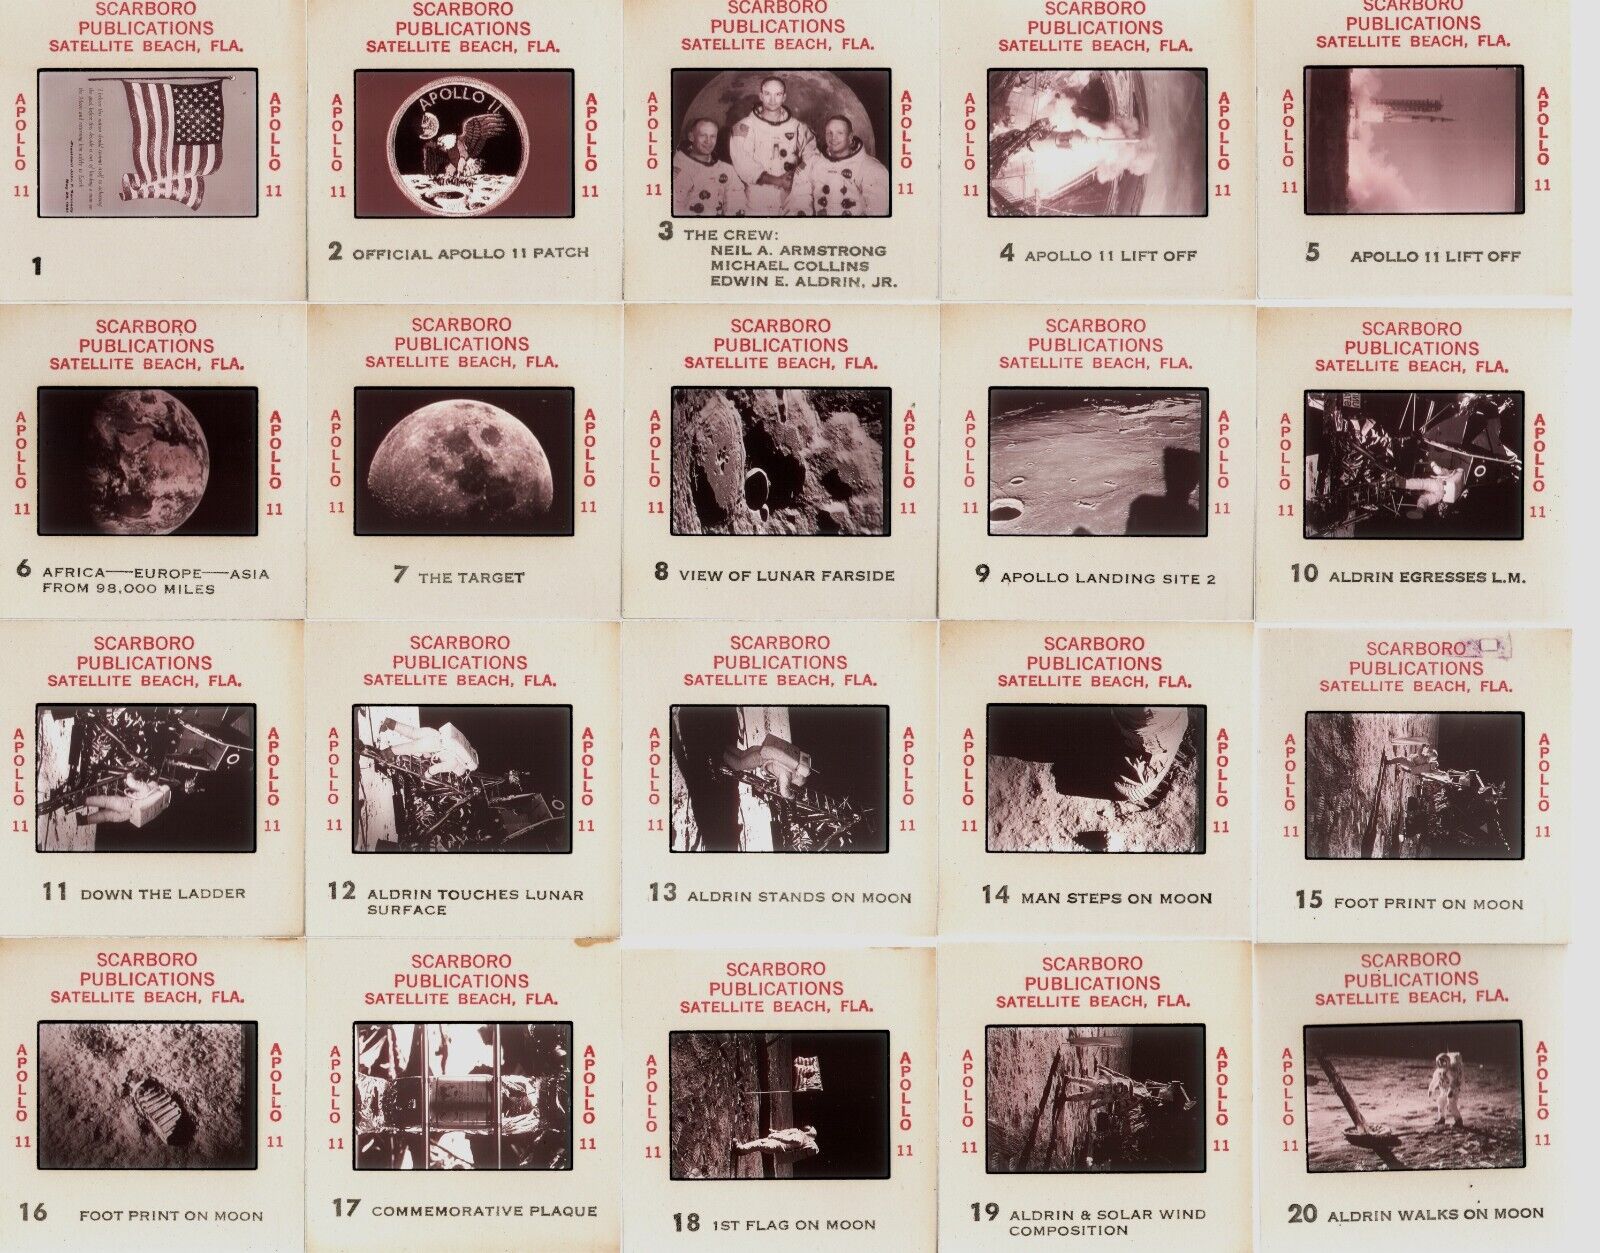 RARE 1969 APOLLO 11 PHOTOGRAPHIC SLIDES SET SCARBORO